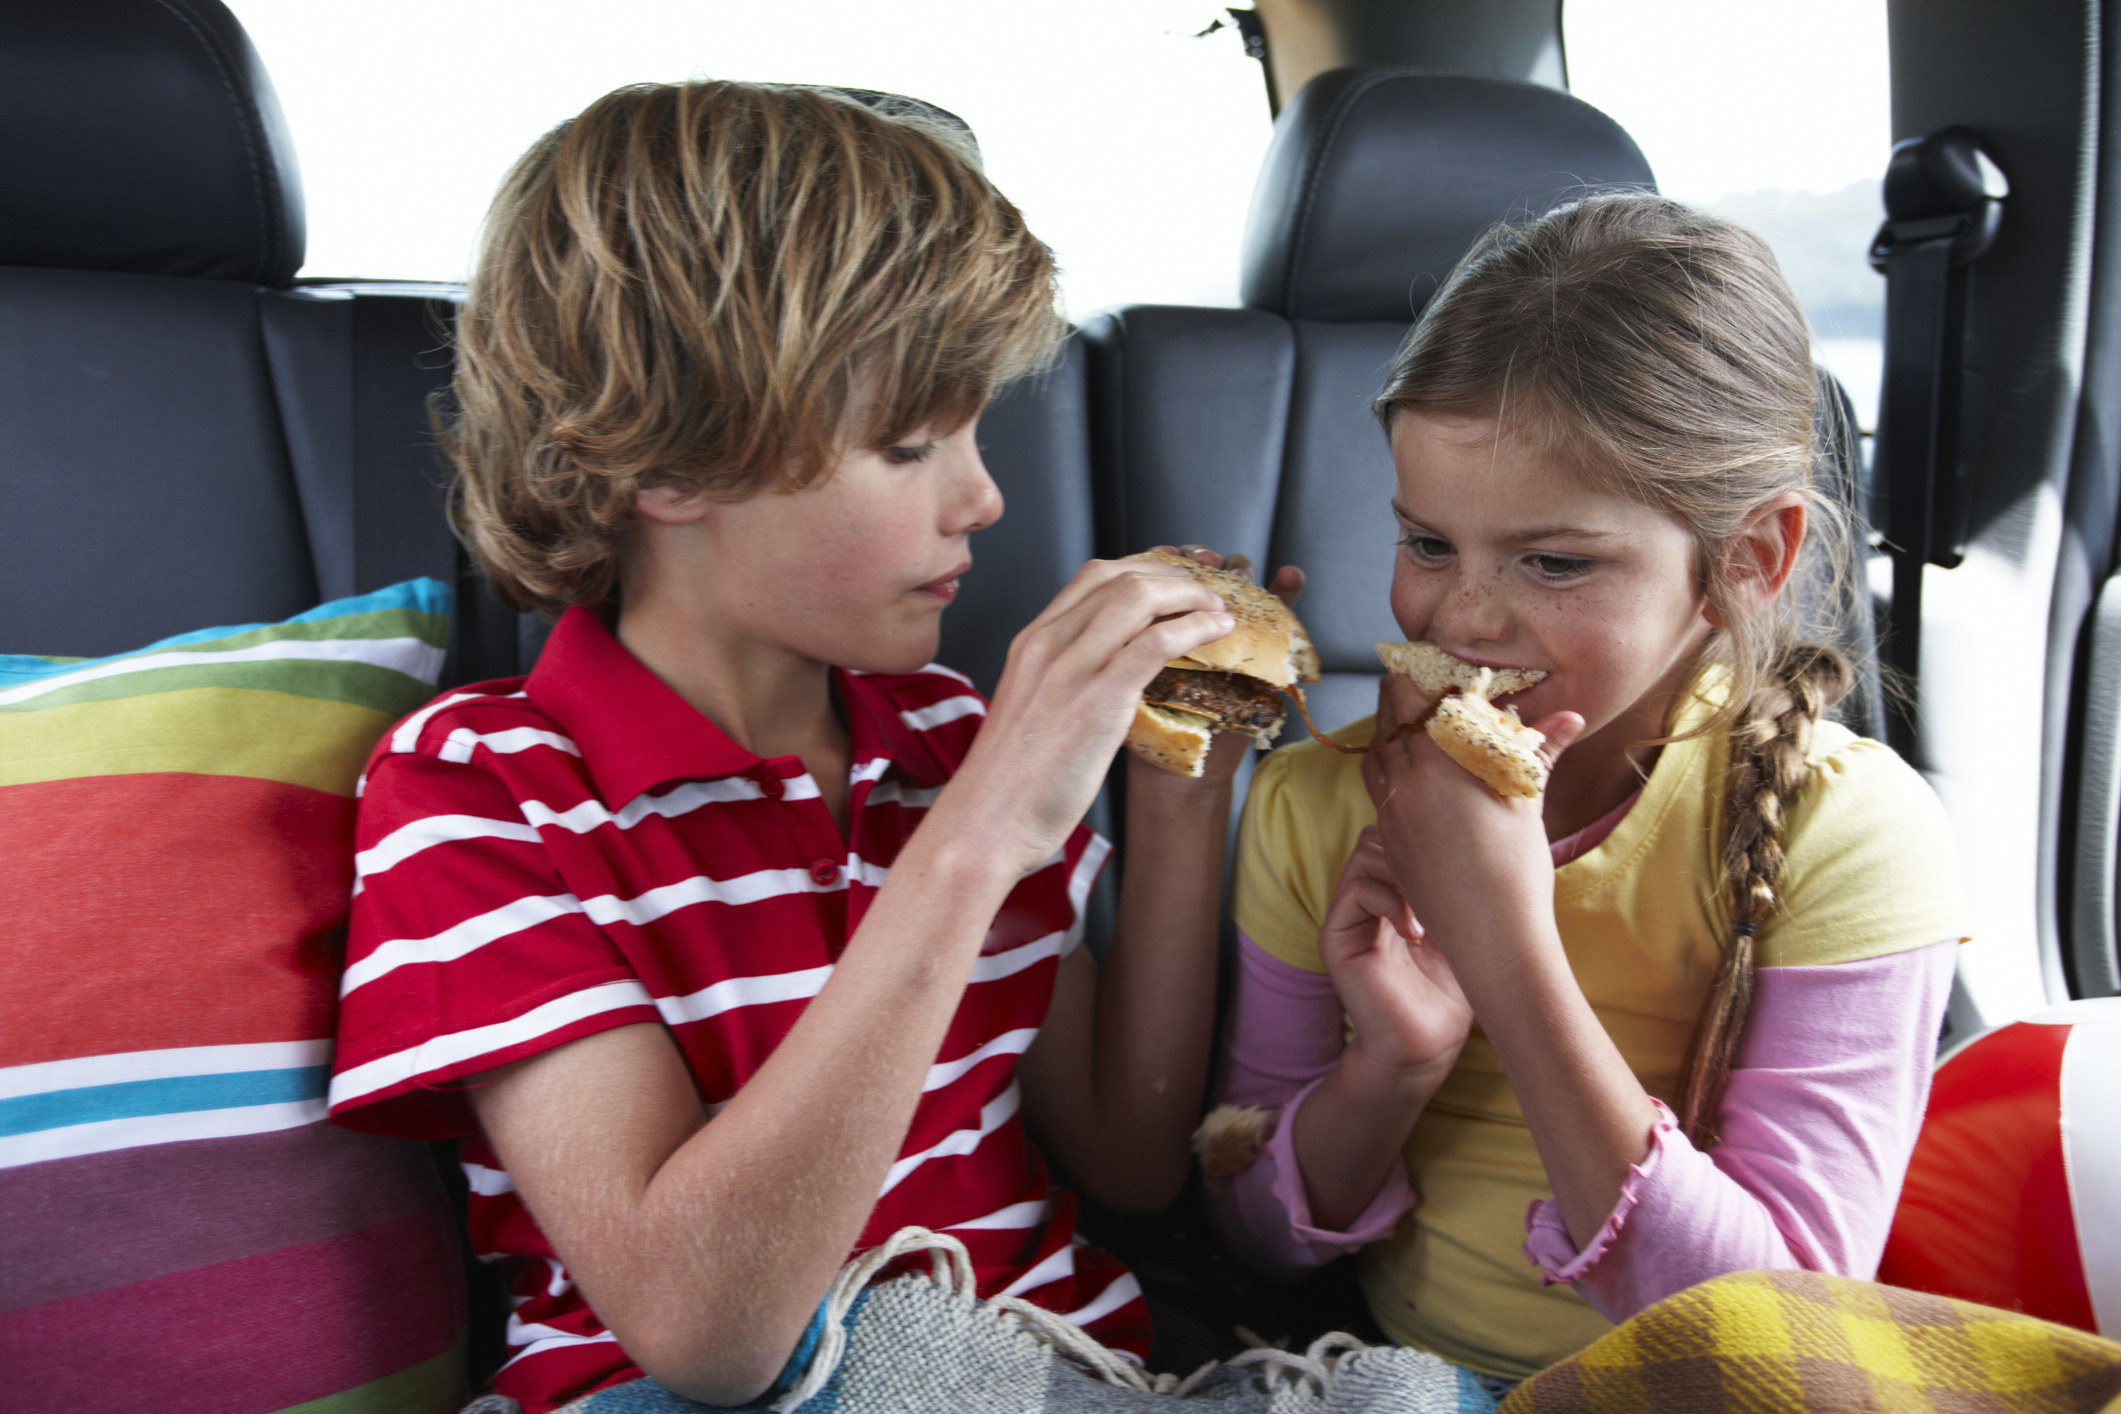 Two children sharing a burger